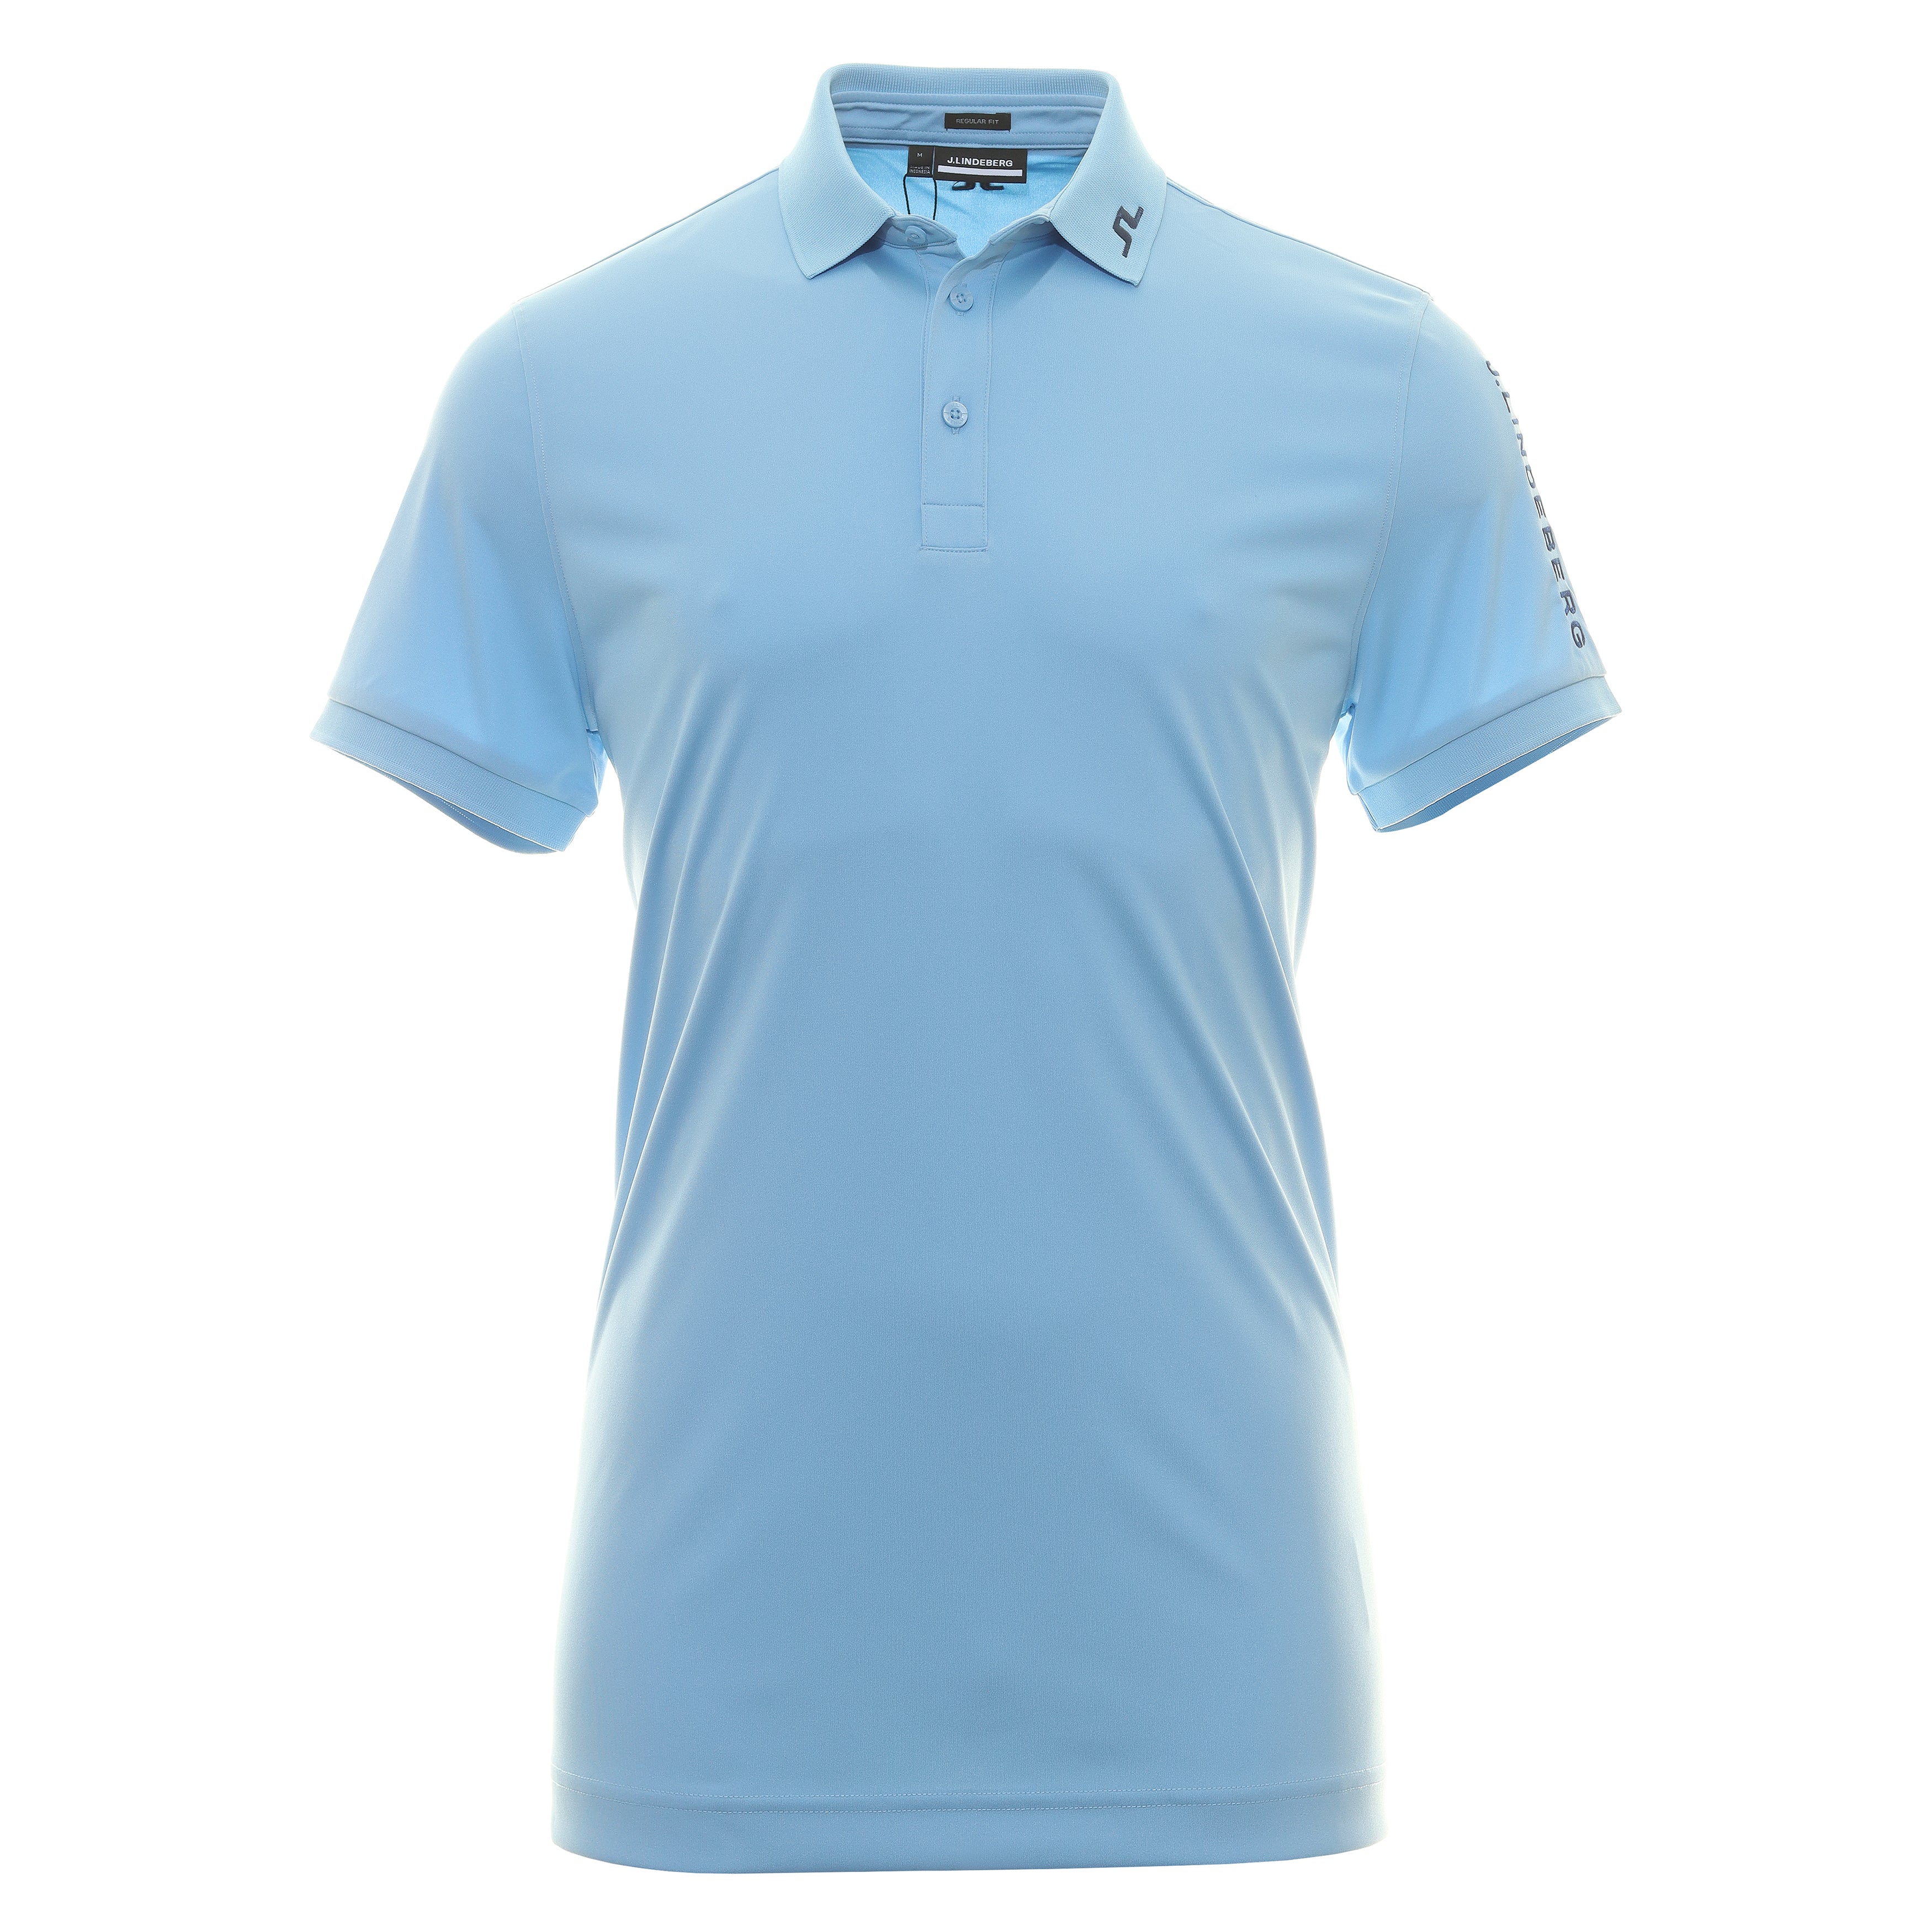 J.Lindeberg Golf Tour Tech Polo Shirt GMJT08836 Little Boy Blue O092 ...